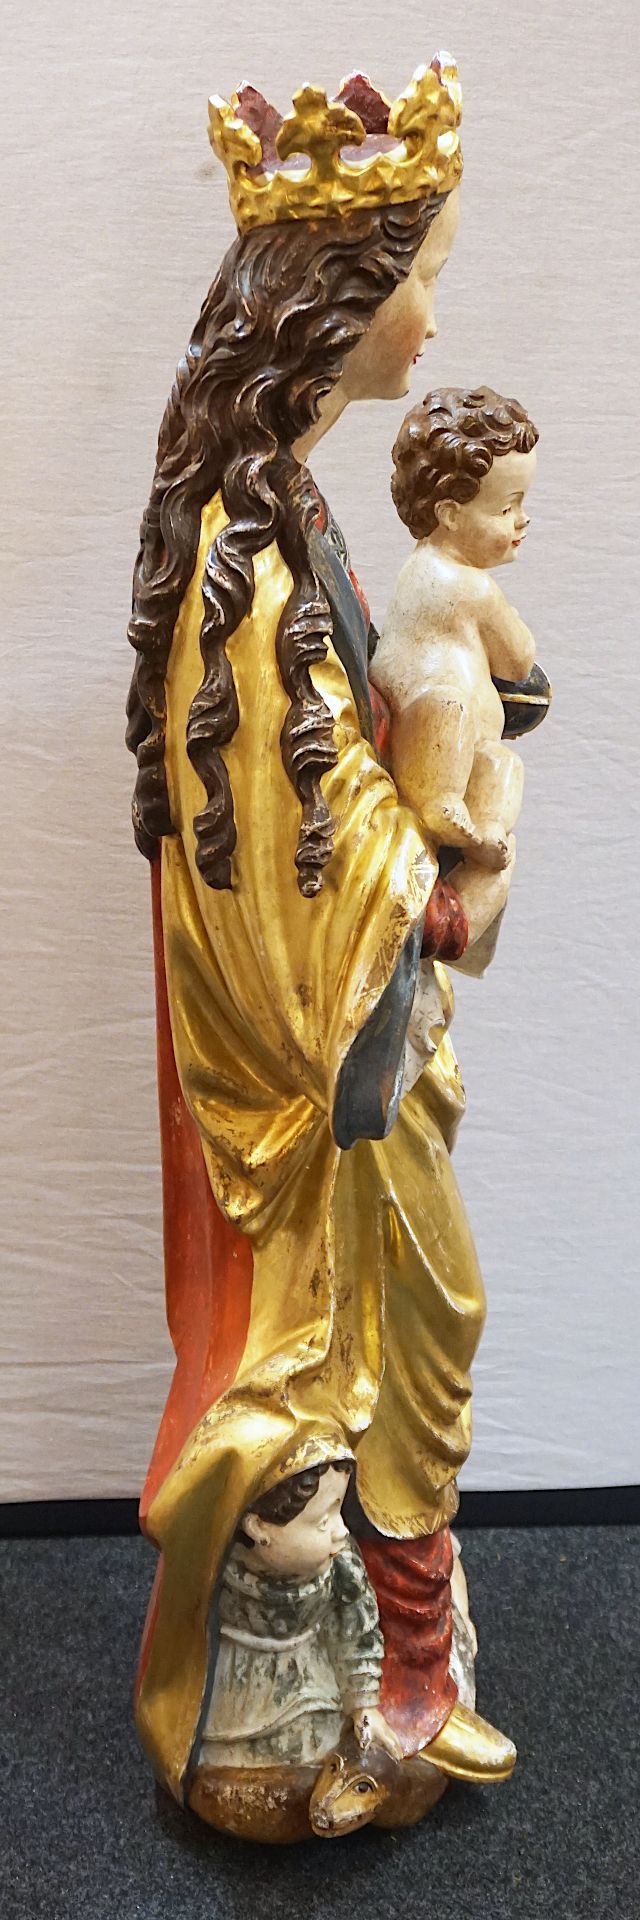 1 Holzfigur 20. Jh. "Mondsichelmadonna" polychrom gefasst, ca. H 101cm, z.T. ber., je Asp. - Image 2 of 4